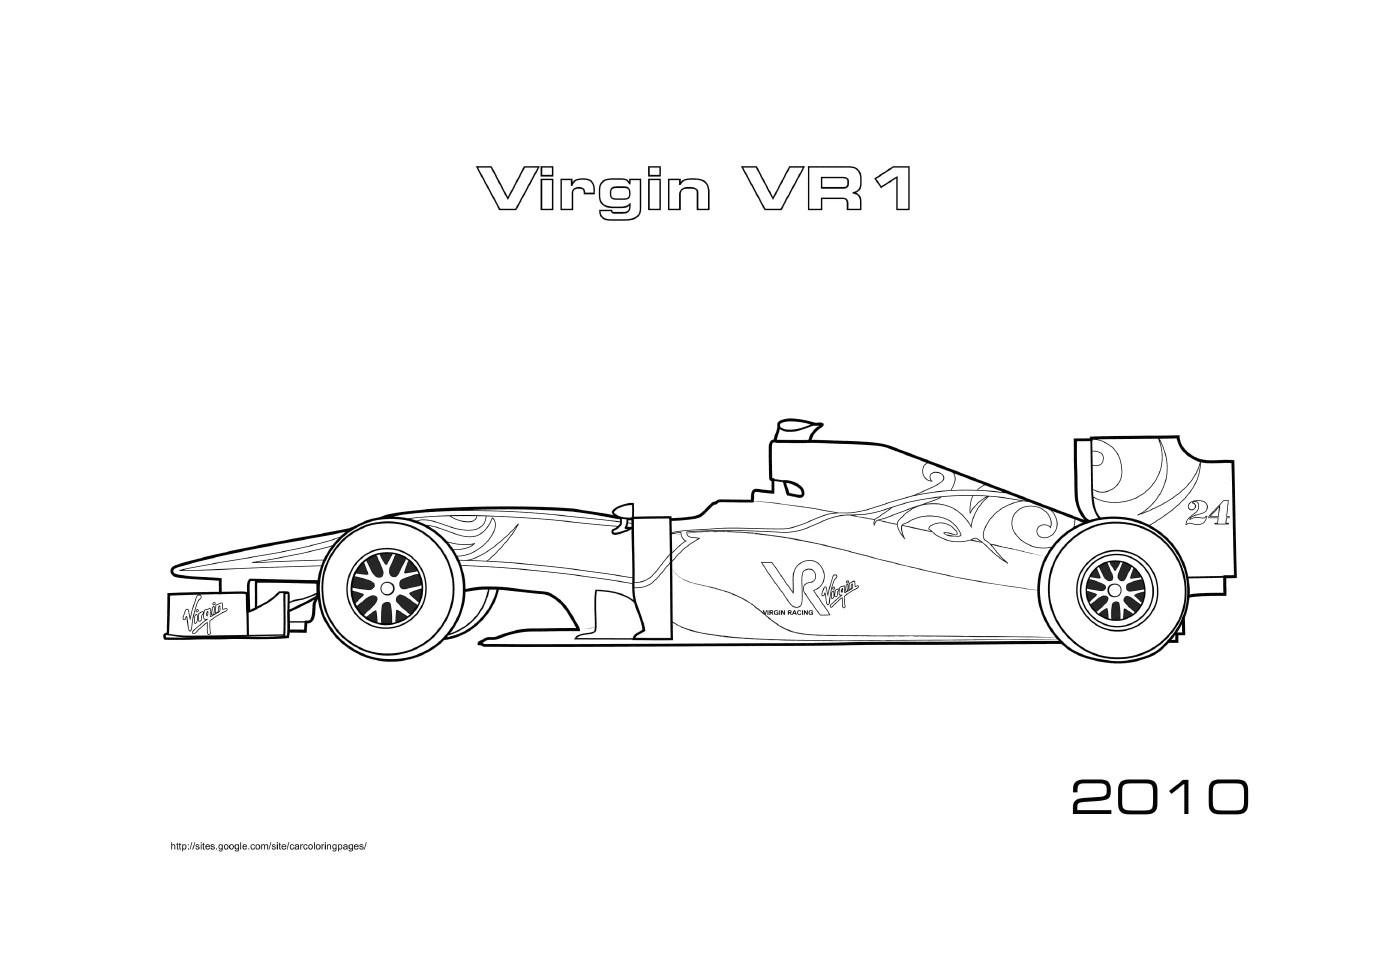  Virgin VR1 2010 auto da corsa 